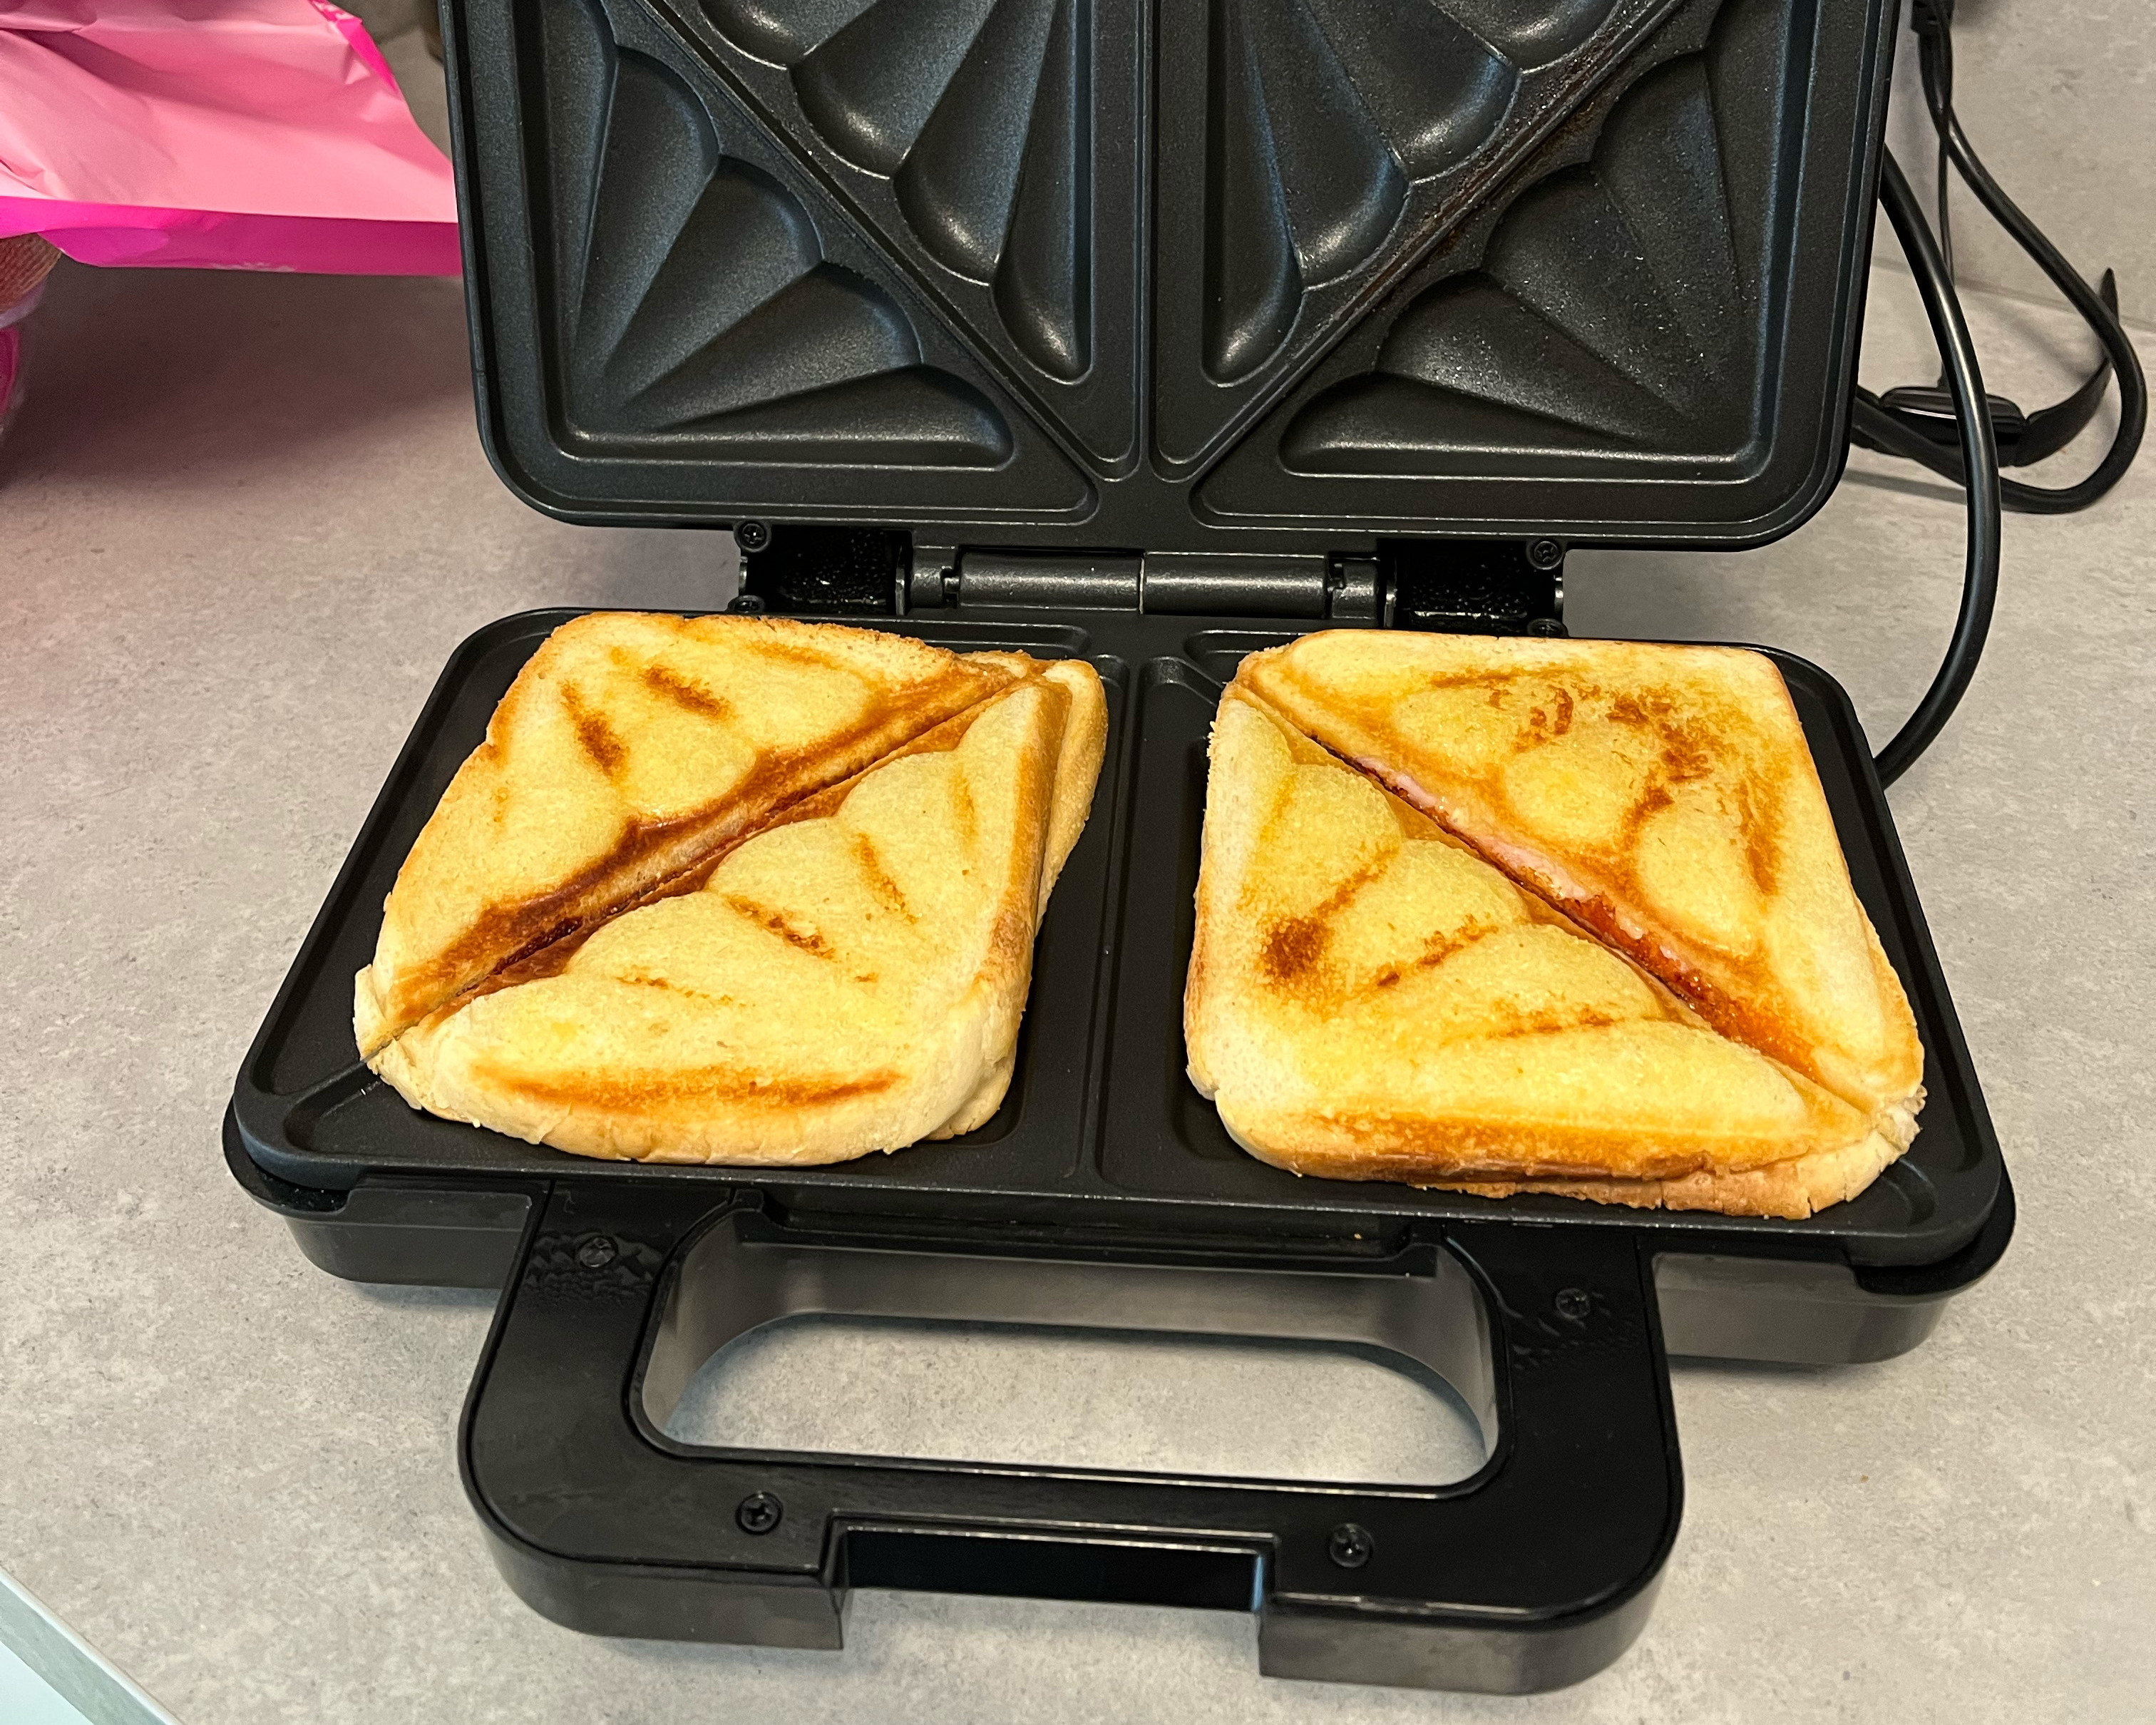 VonShef 4-slice toastie maker review - Review